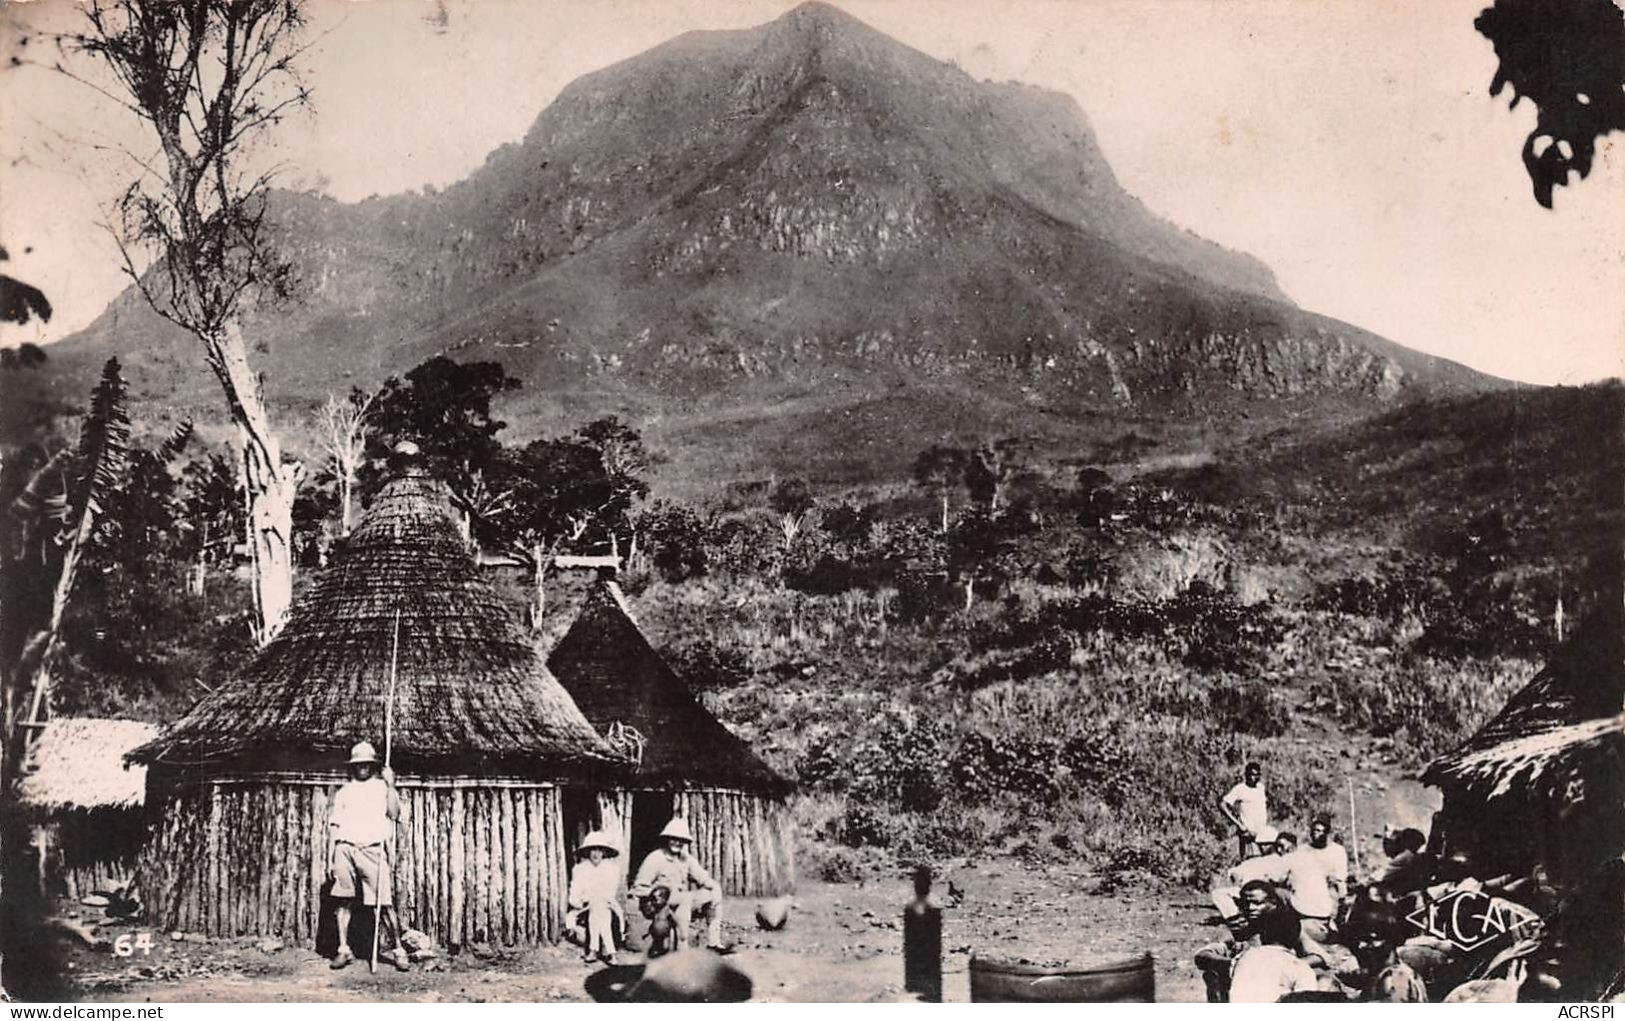 CAMEROUN  Circonscription De N'Kongsamba Montagne De Nenou   (Scan R/V) N°   7   \QQ1110Ter - Camerún